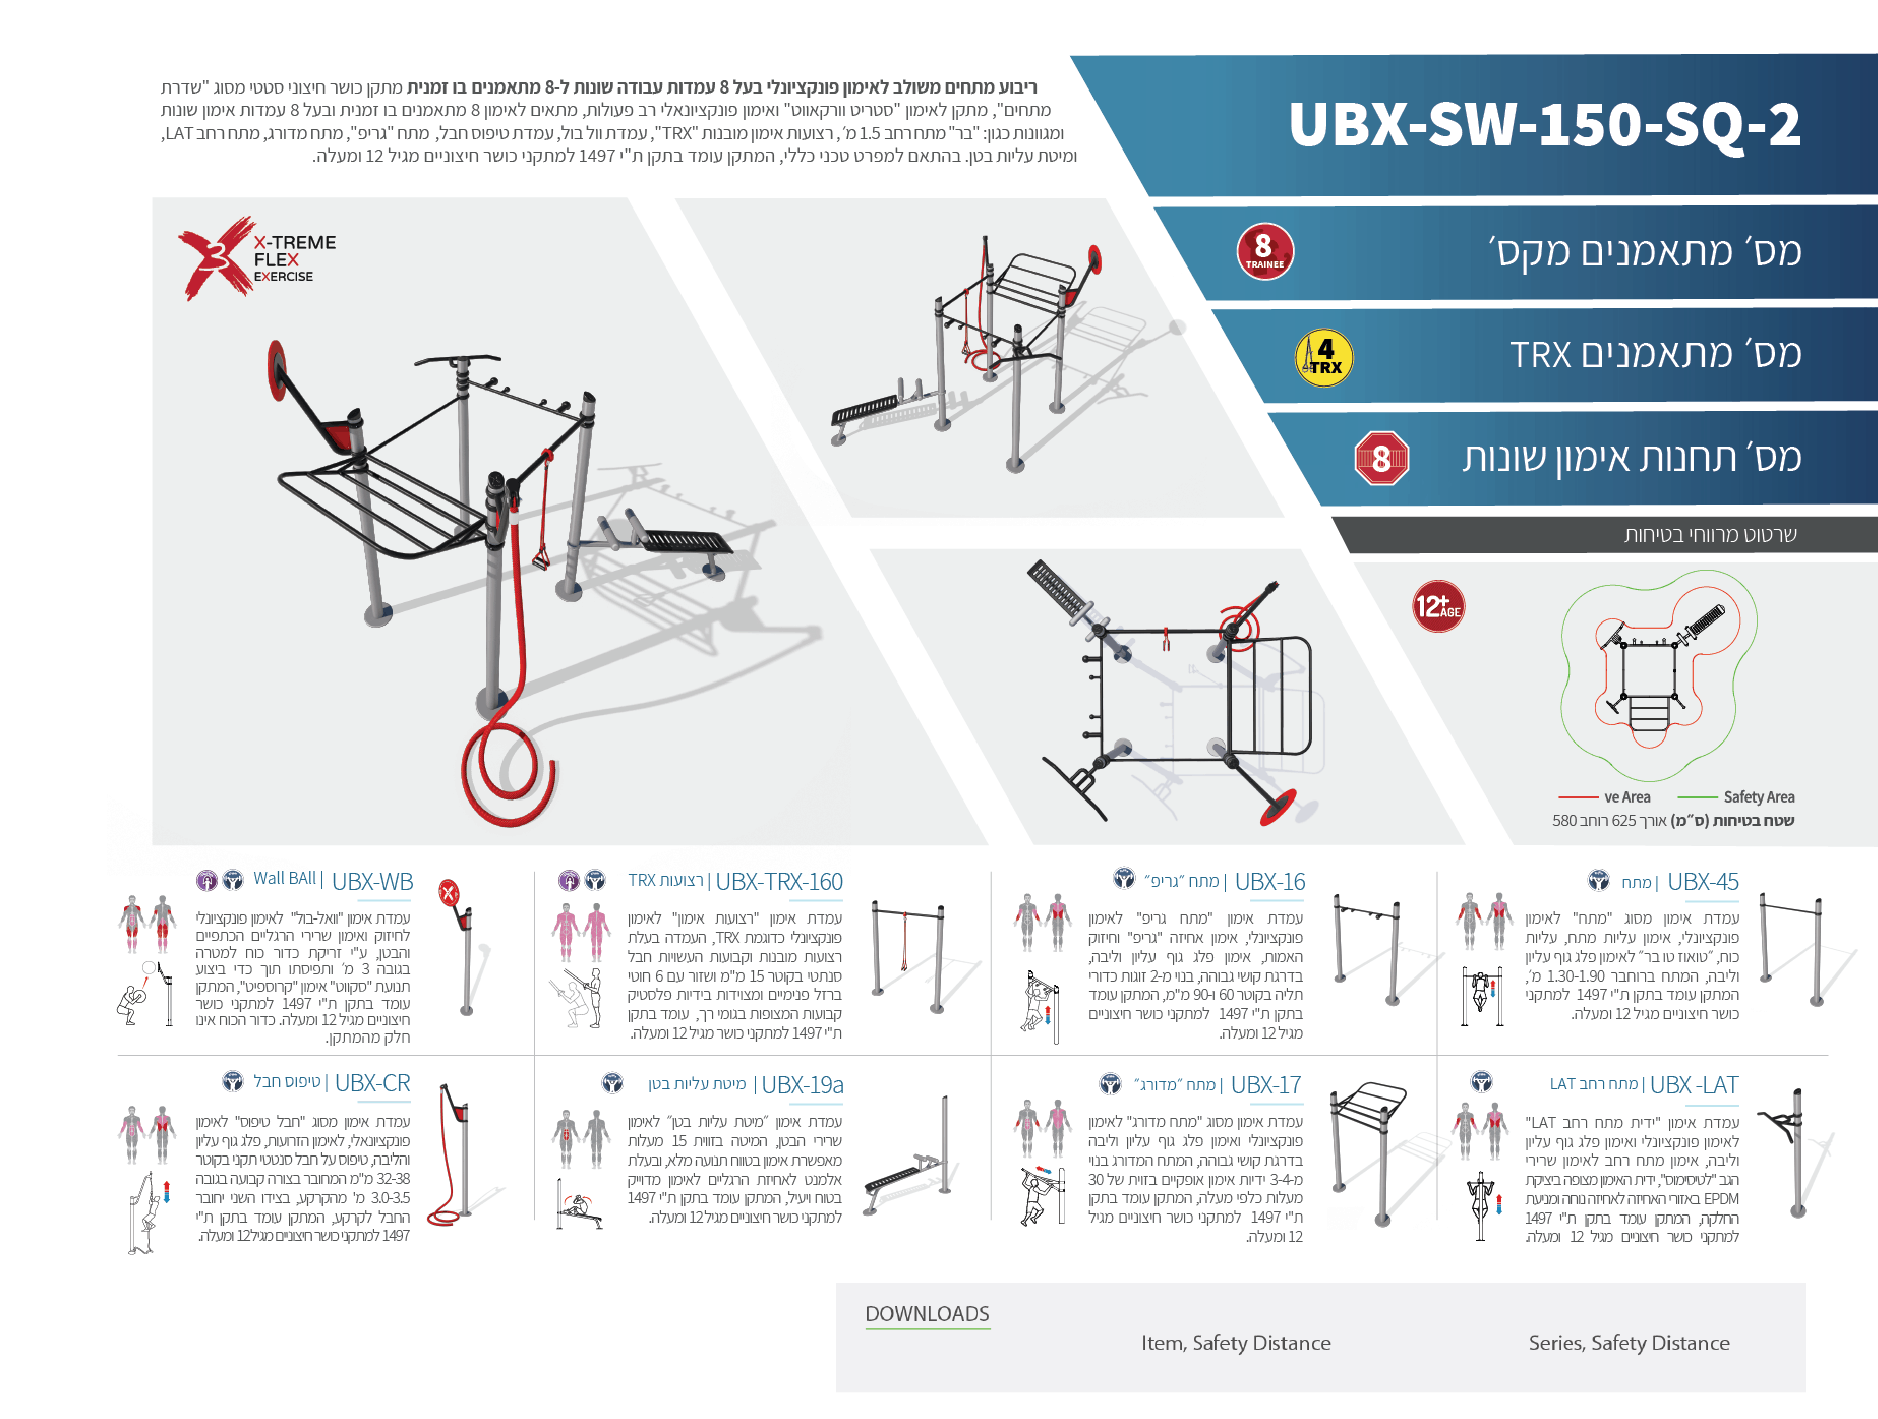 ubx-sw-150 אורבניקס - מתקן כושר